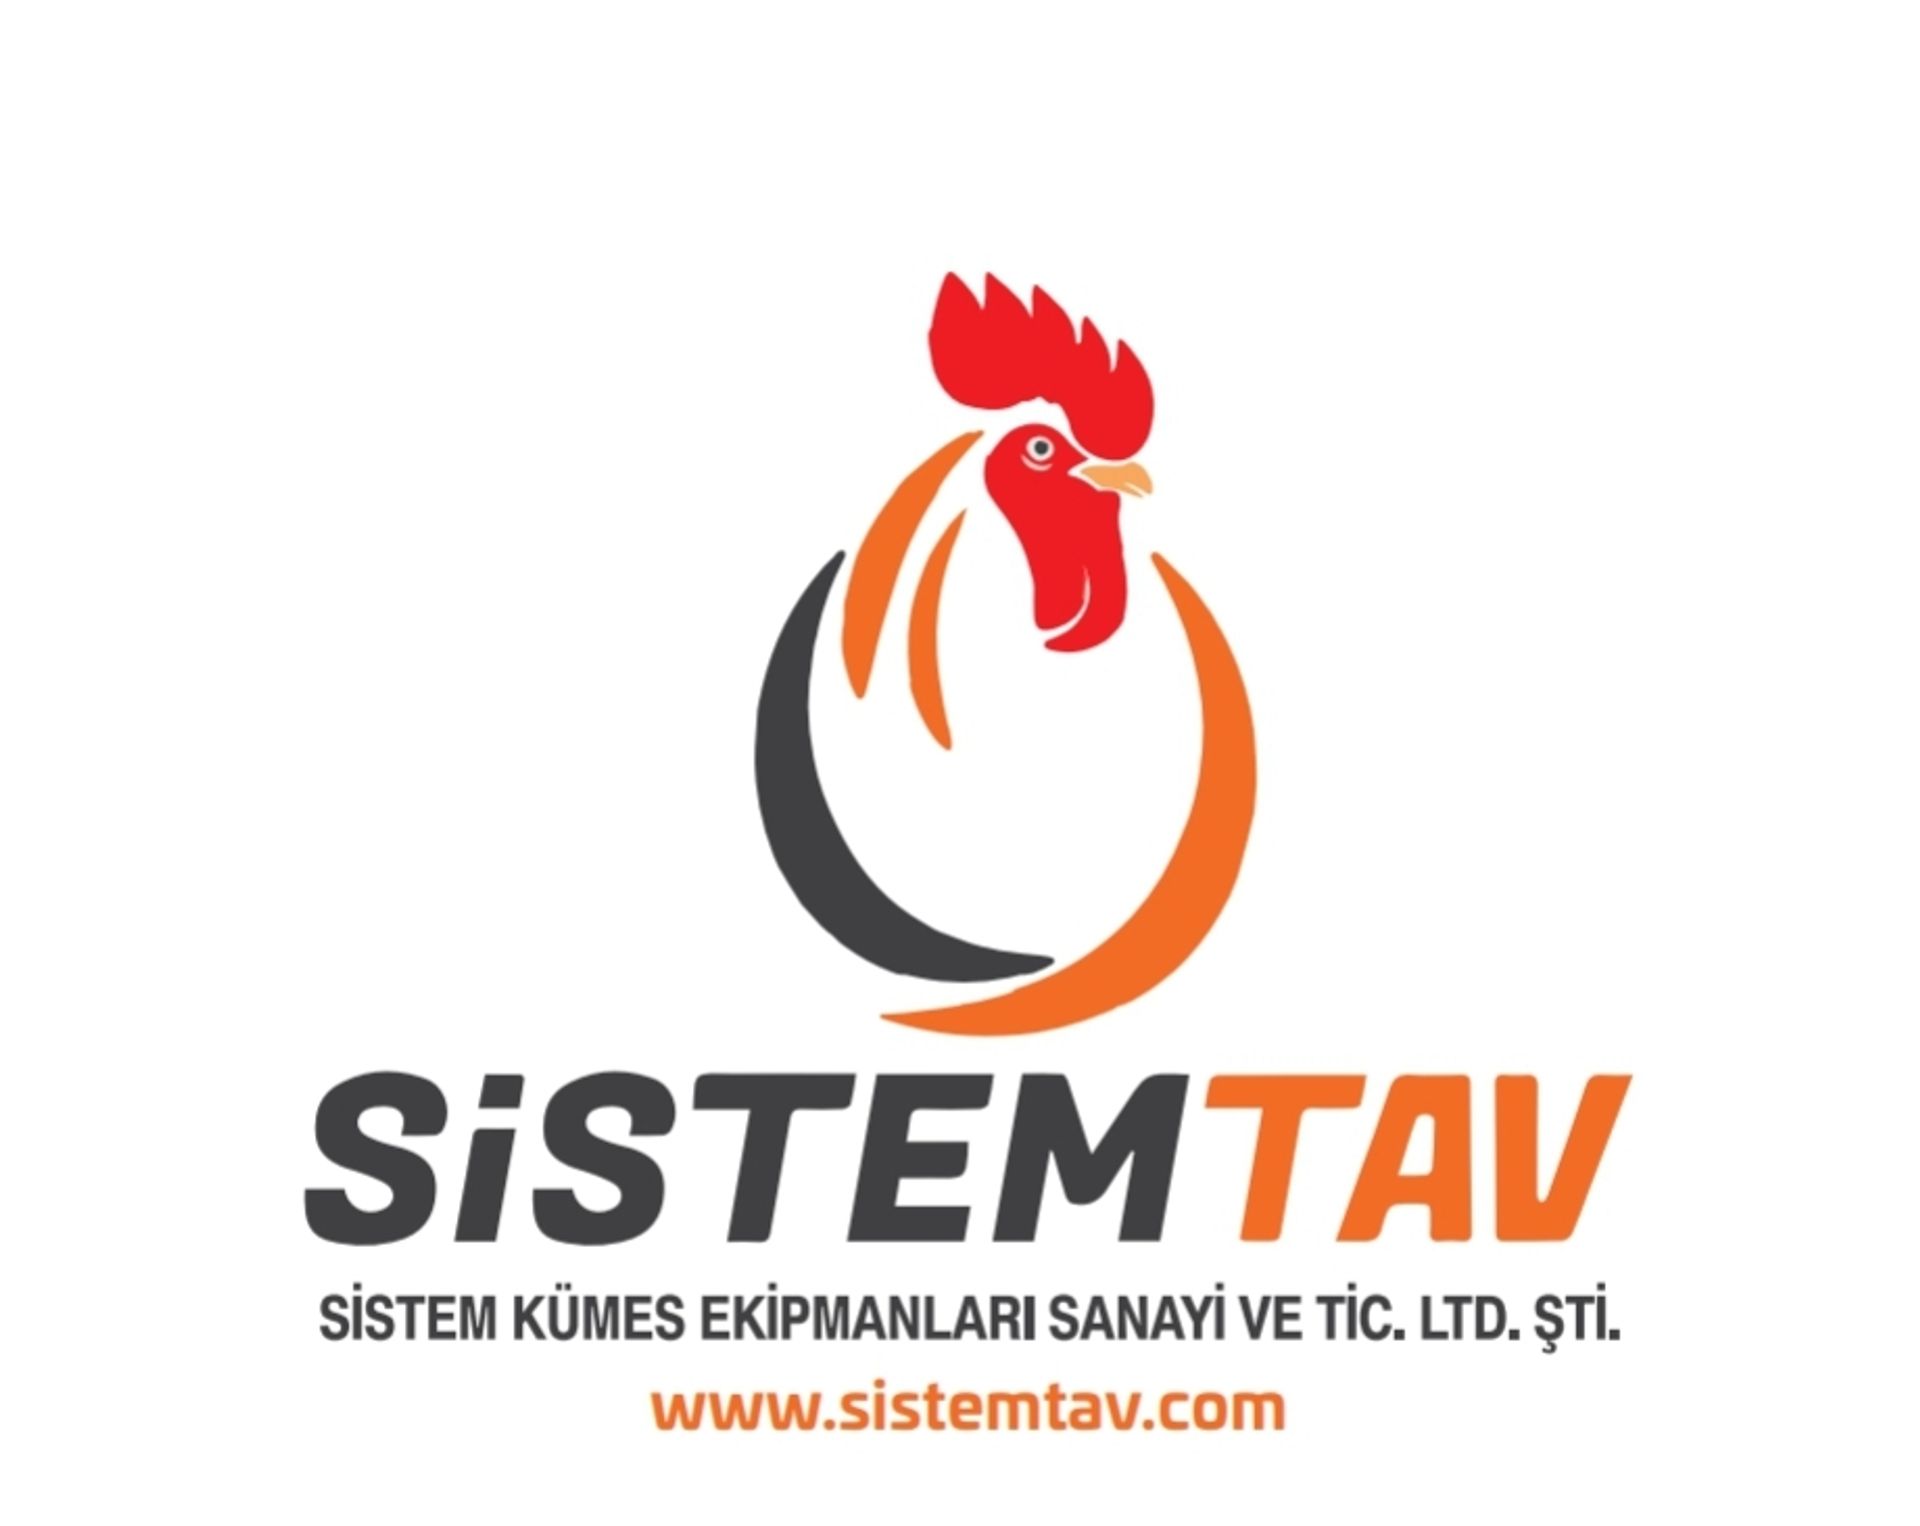 Sistem Kumes Ekipmanlari San. ve Tic. Ltd. Sti.